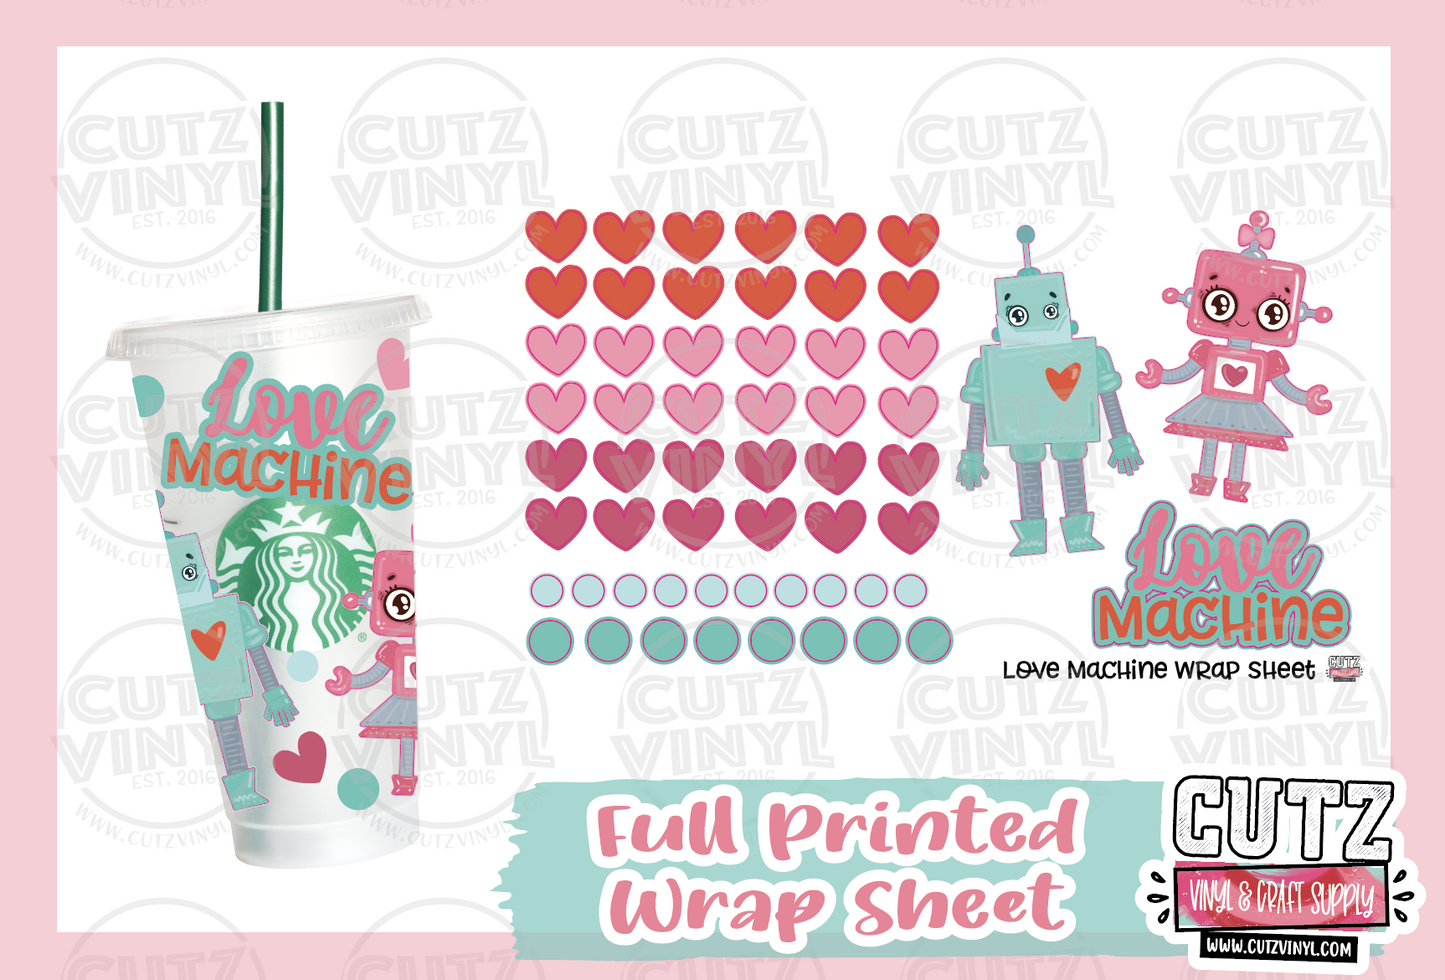 Love Machine Wrap Sheet